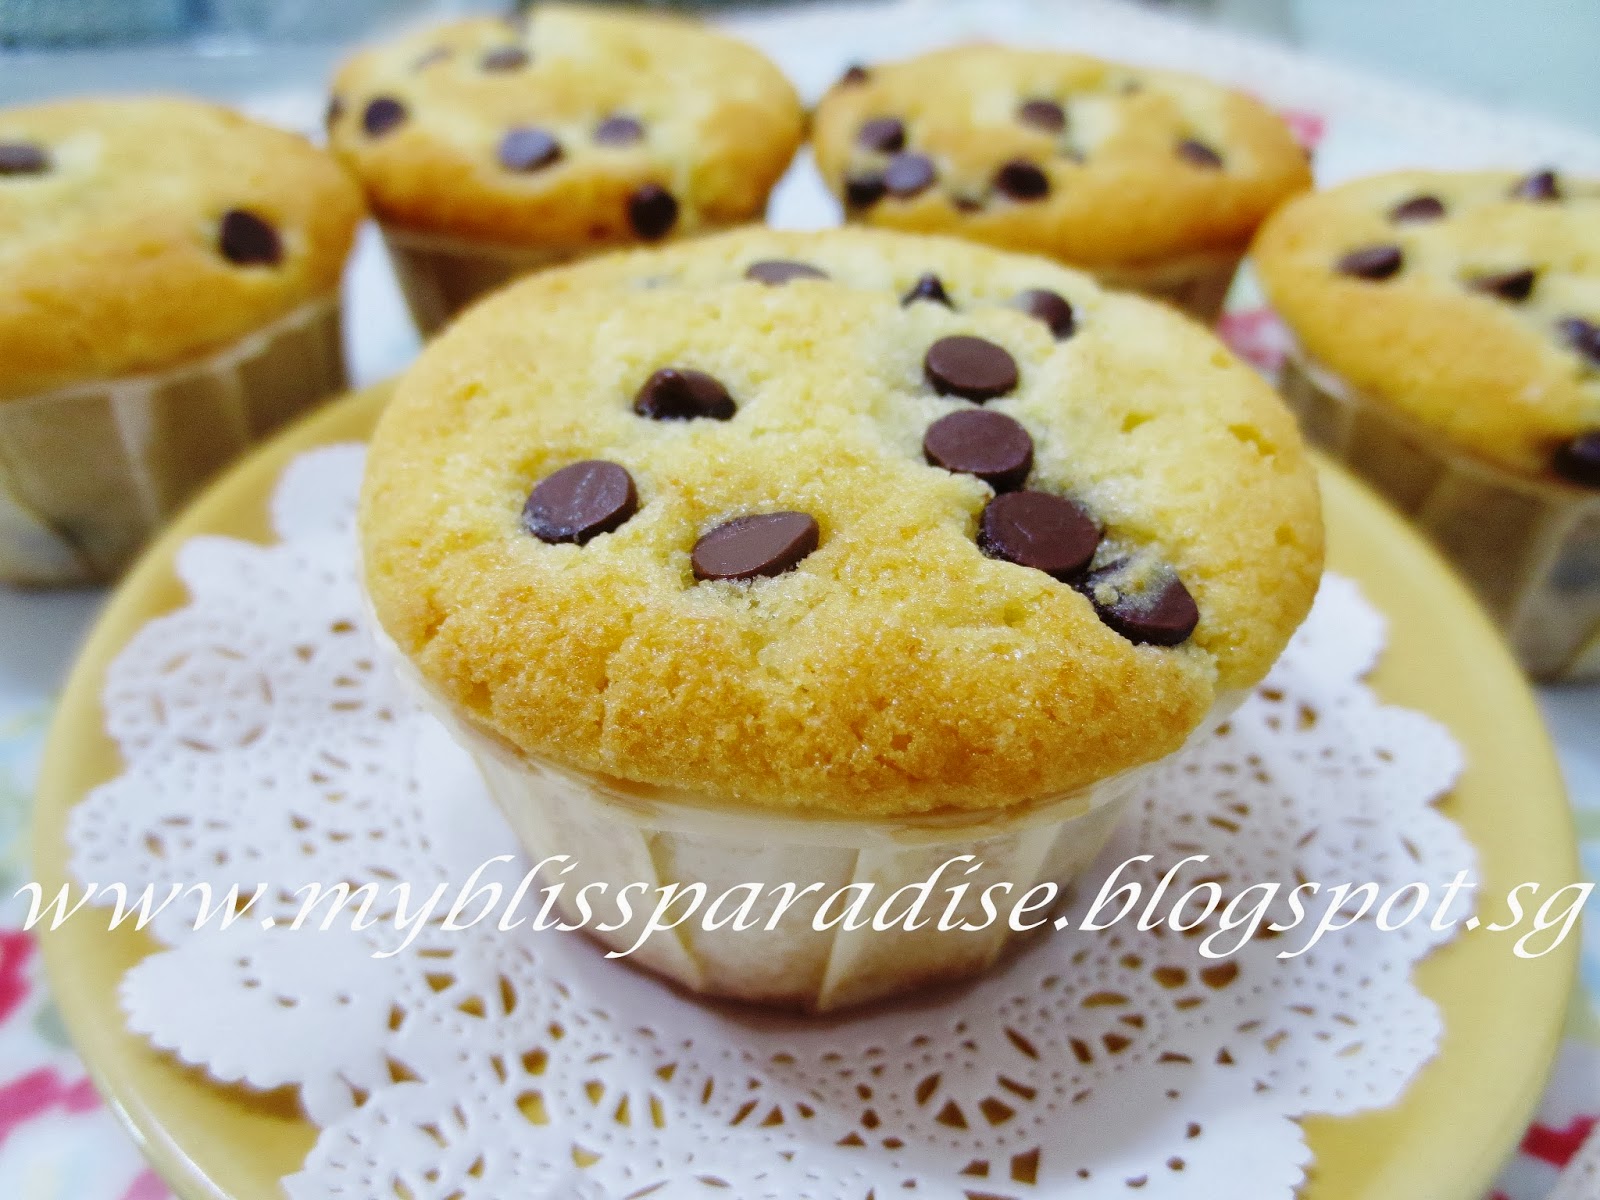 http://myblissparadise.blogspot.sg/2014/01/chocolate-chip-vanilla-cupcakes-15-jan.html